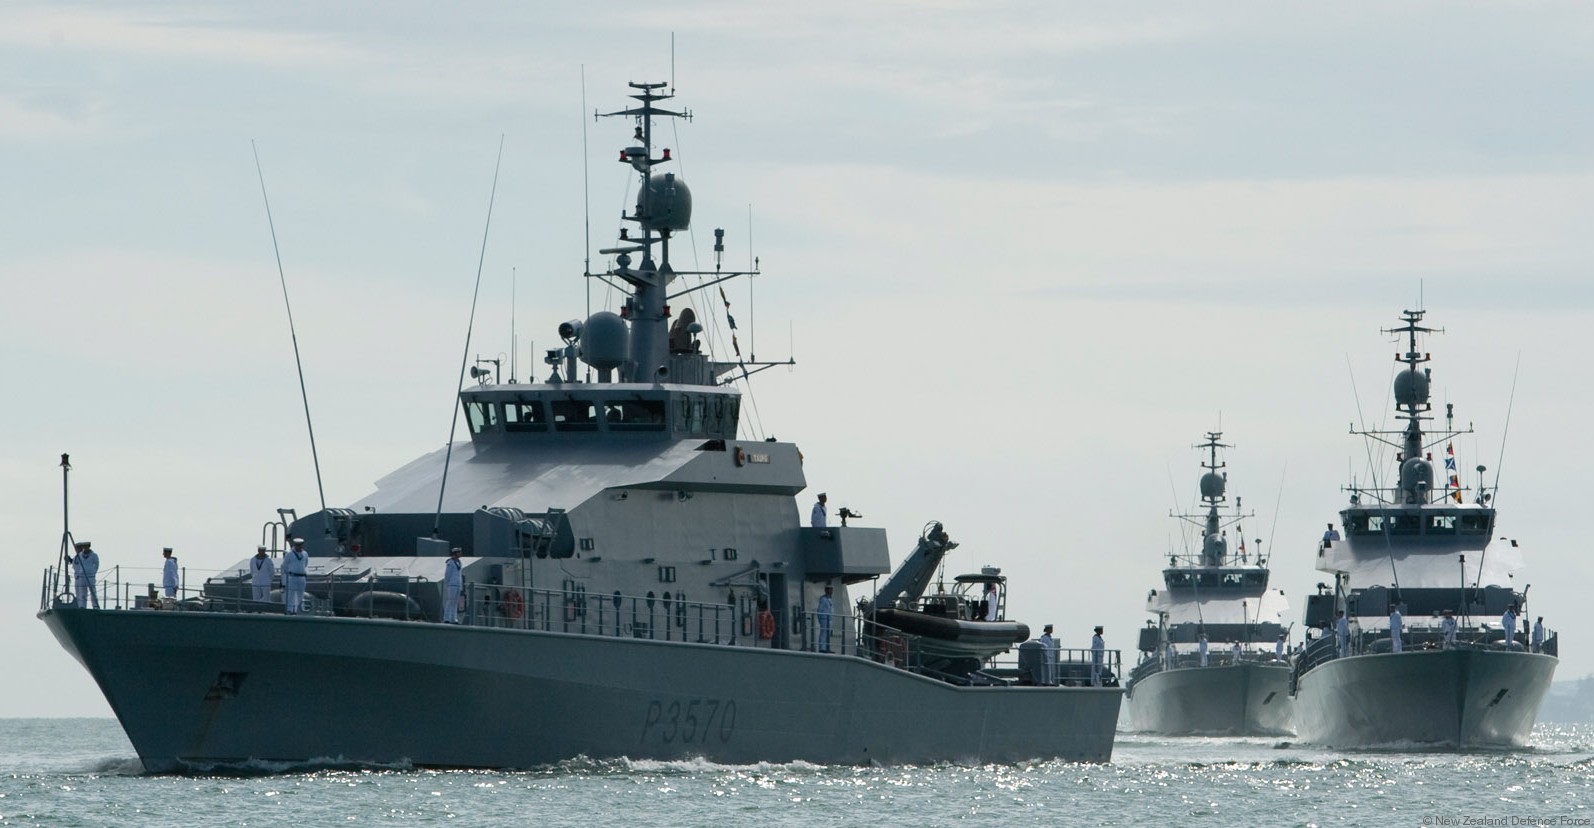 protector rotoiti class inshore patrol vessel royal new zealand navy 03x